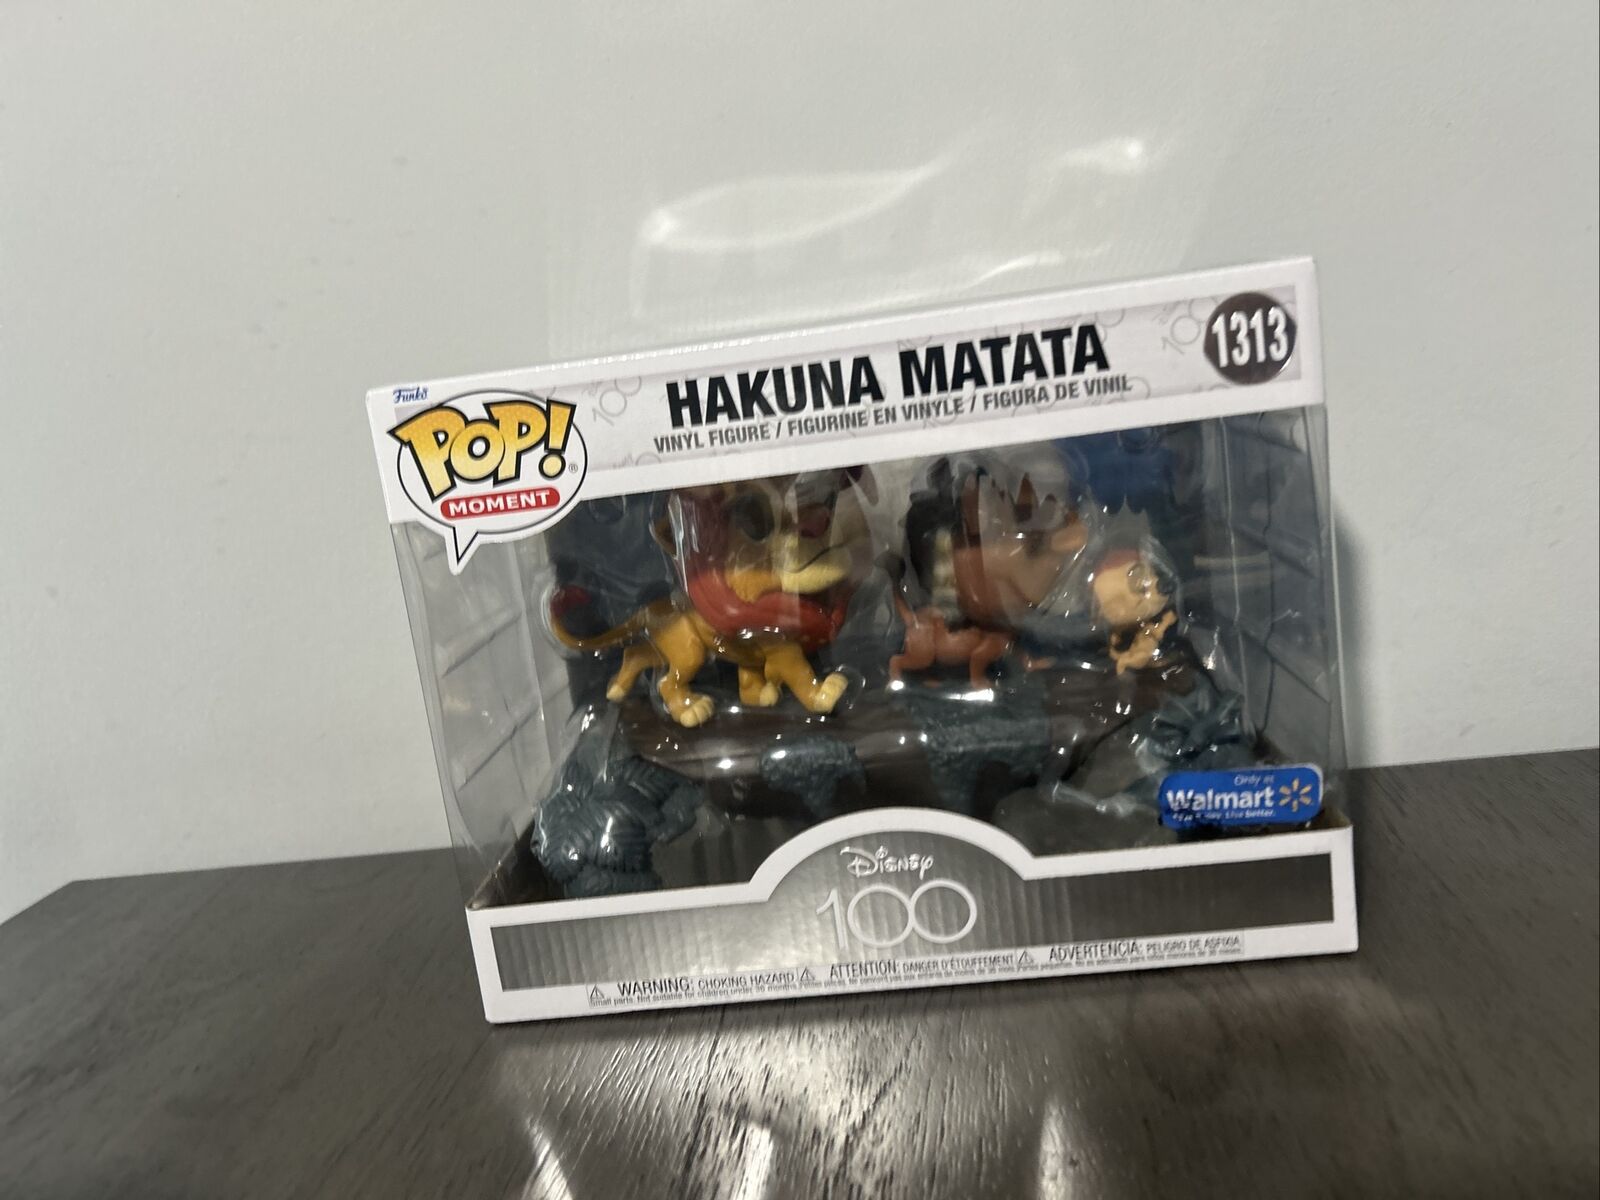 Funko Pop Moment Disney 100 Hakuna Matata #1313 Walmart Exclusive Brand New